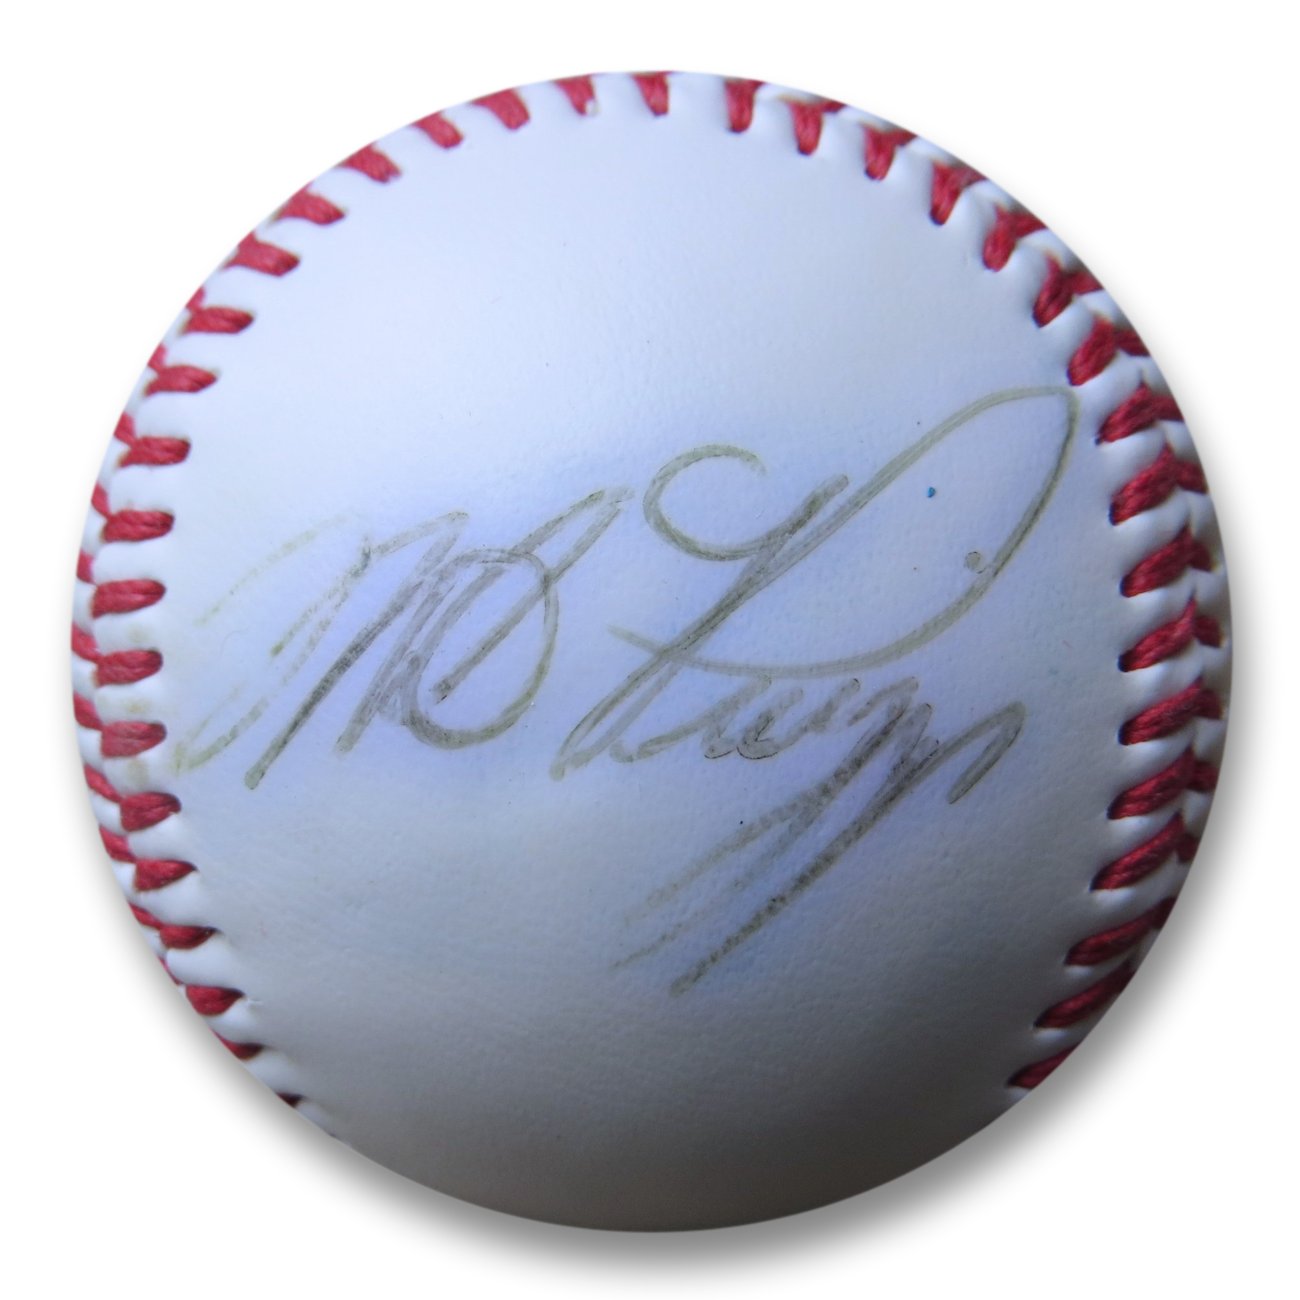 Mike Piazza Eric Karros Signed Autographed Photo Baseball Dodgers GV917258  - Cardboard Legends